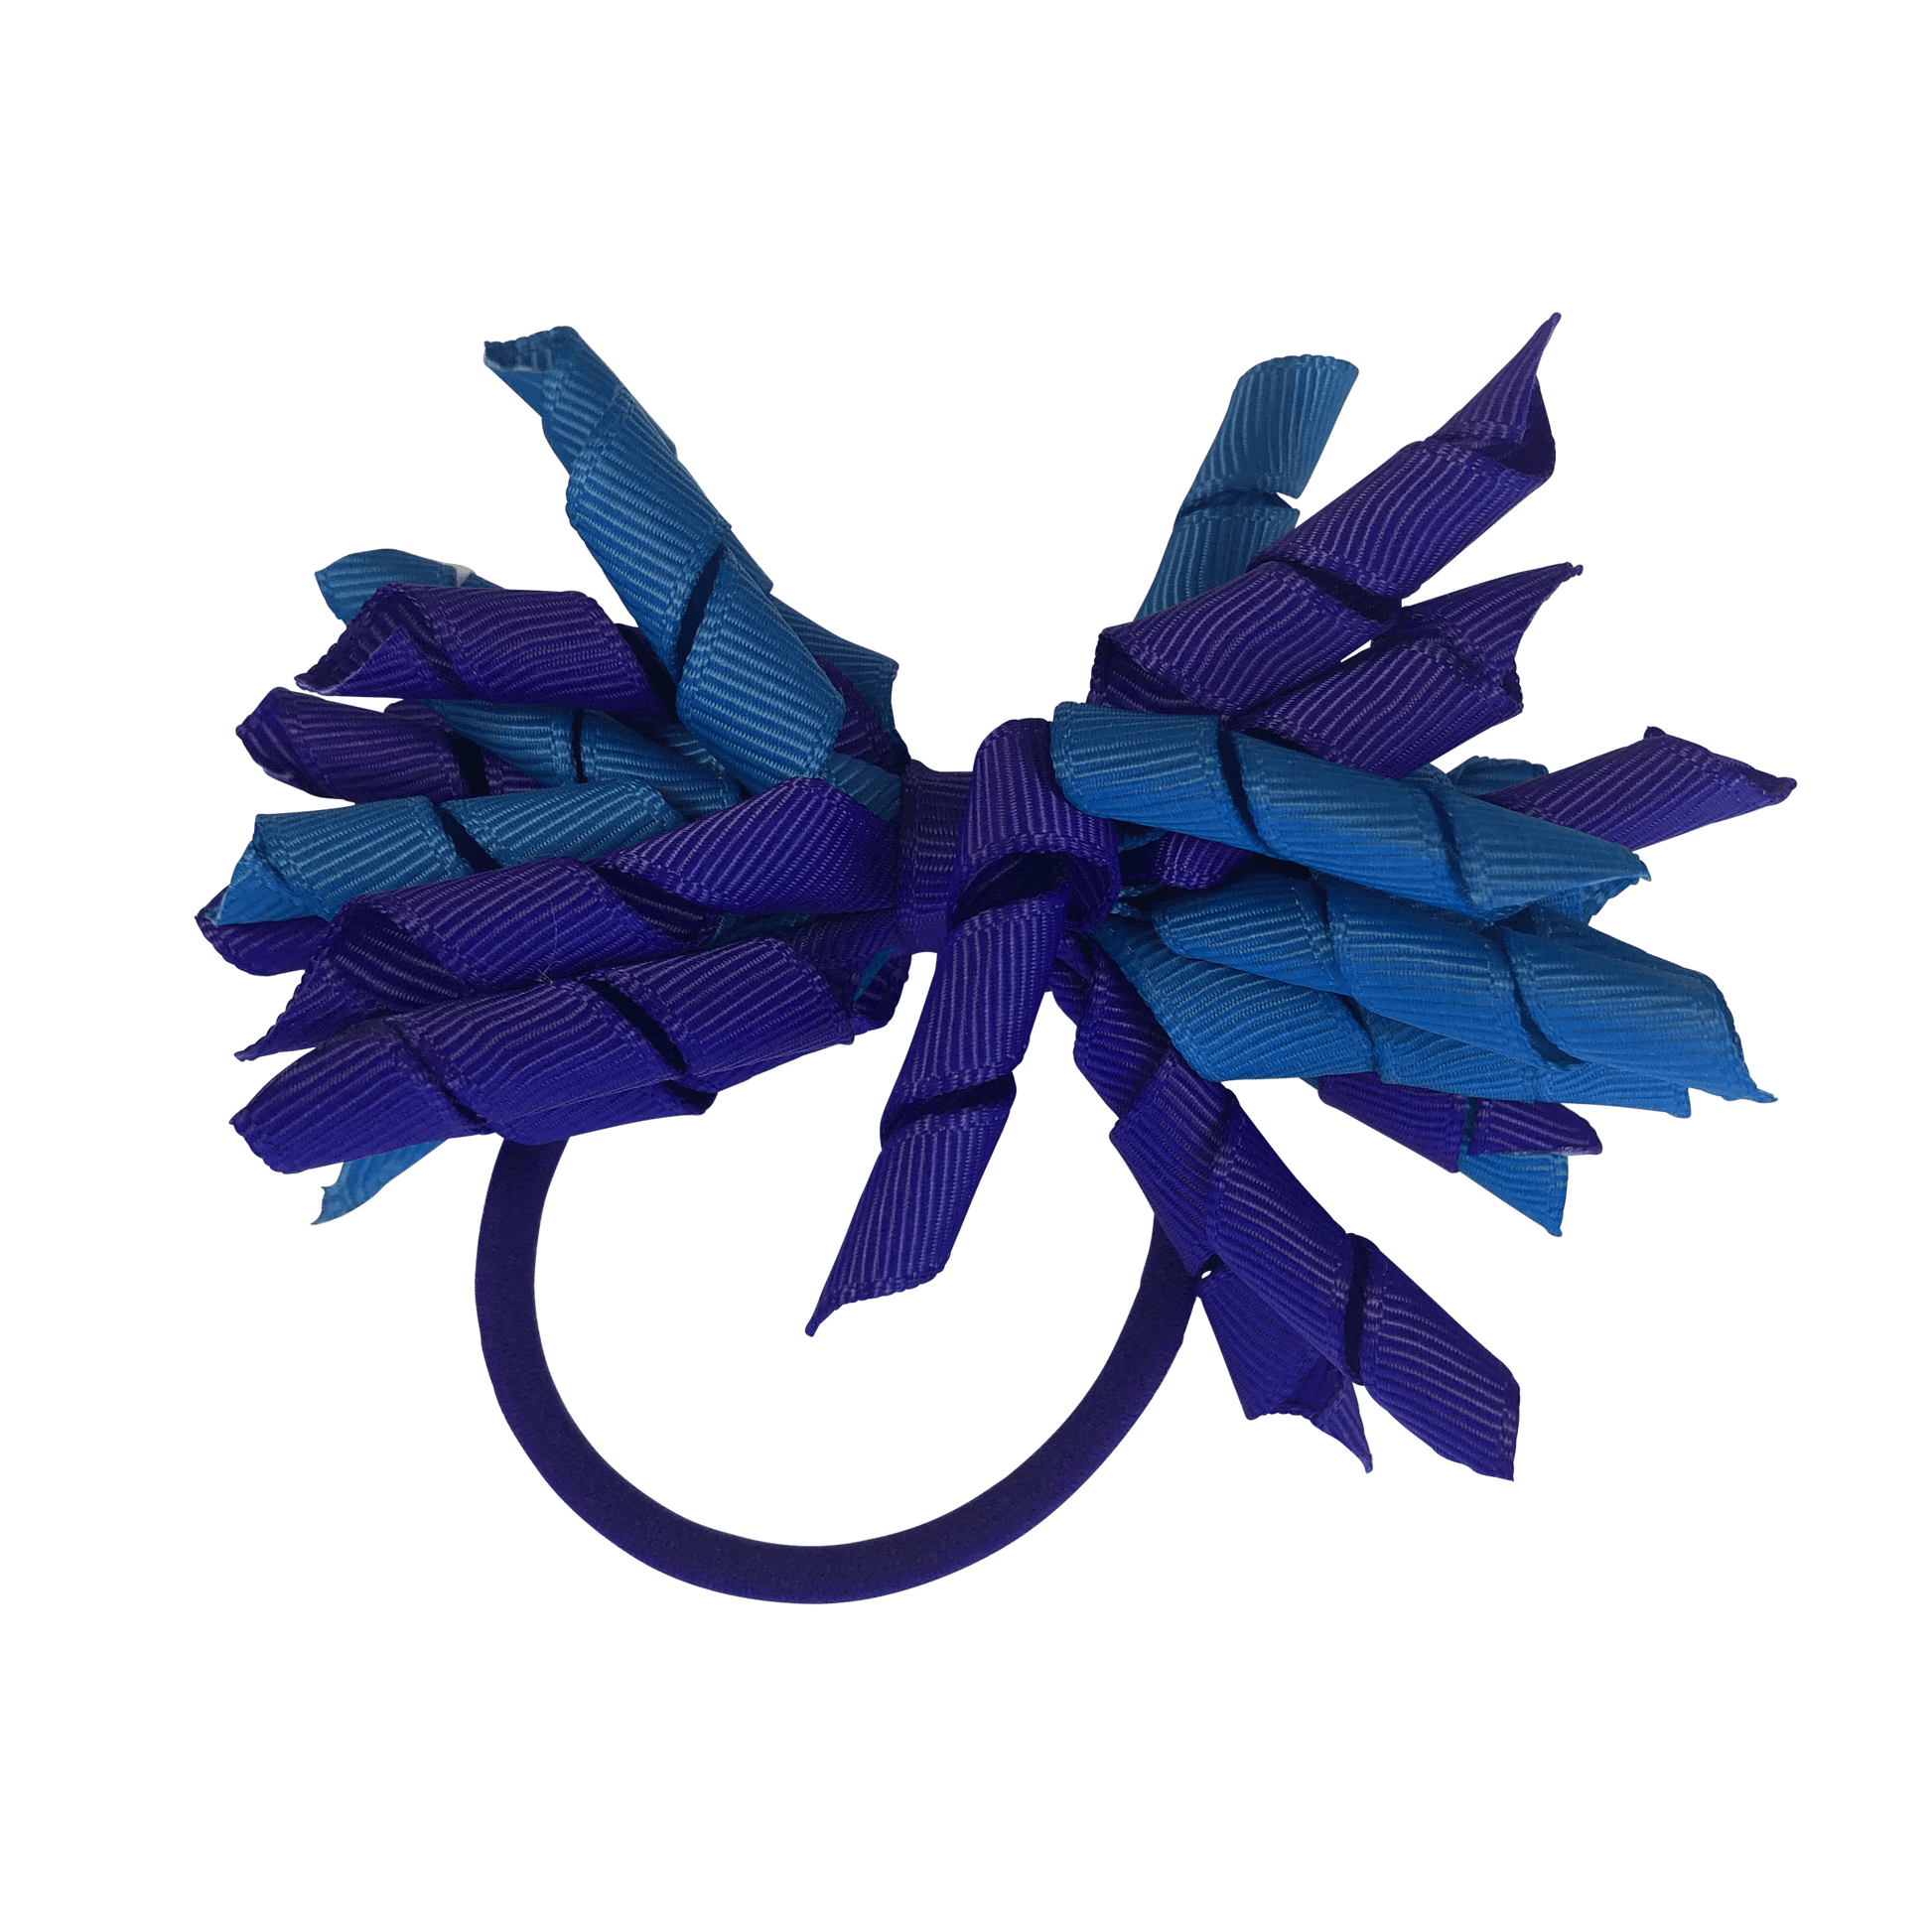 Sea Blue & Purple Hair Accessories - Assorted Hair Accessories - School Uniform Hair Accessories - Ponytails and Fairytales